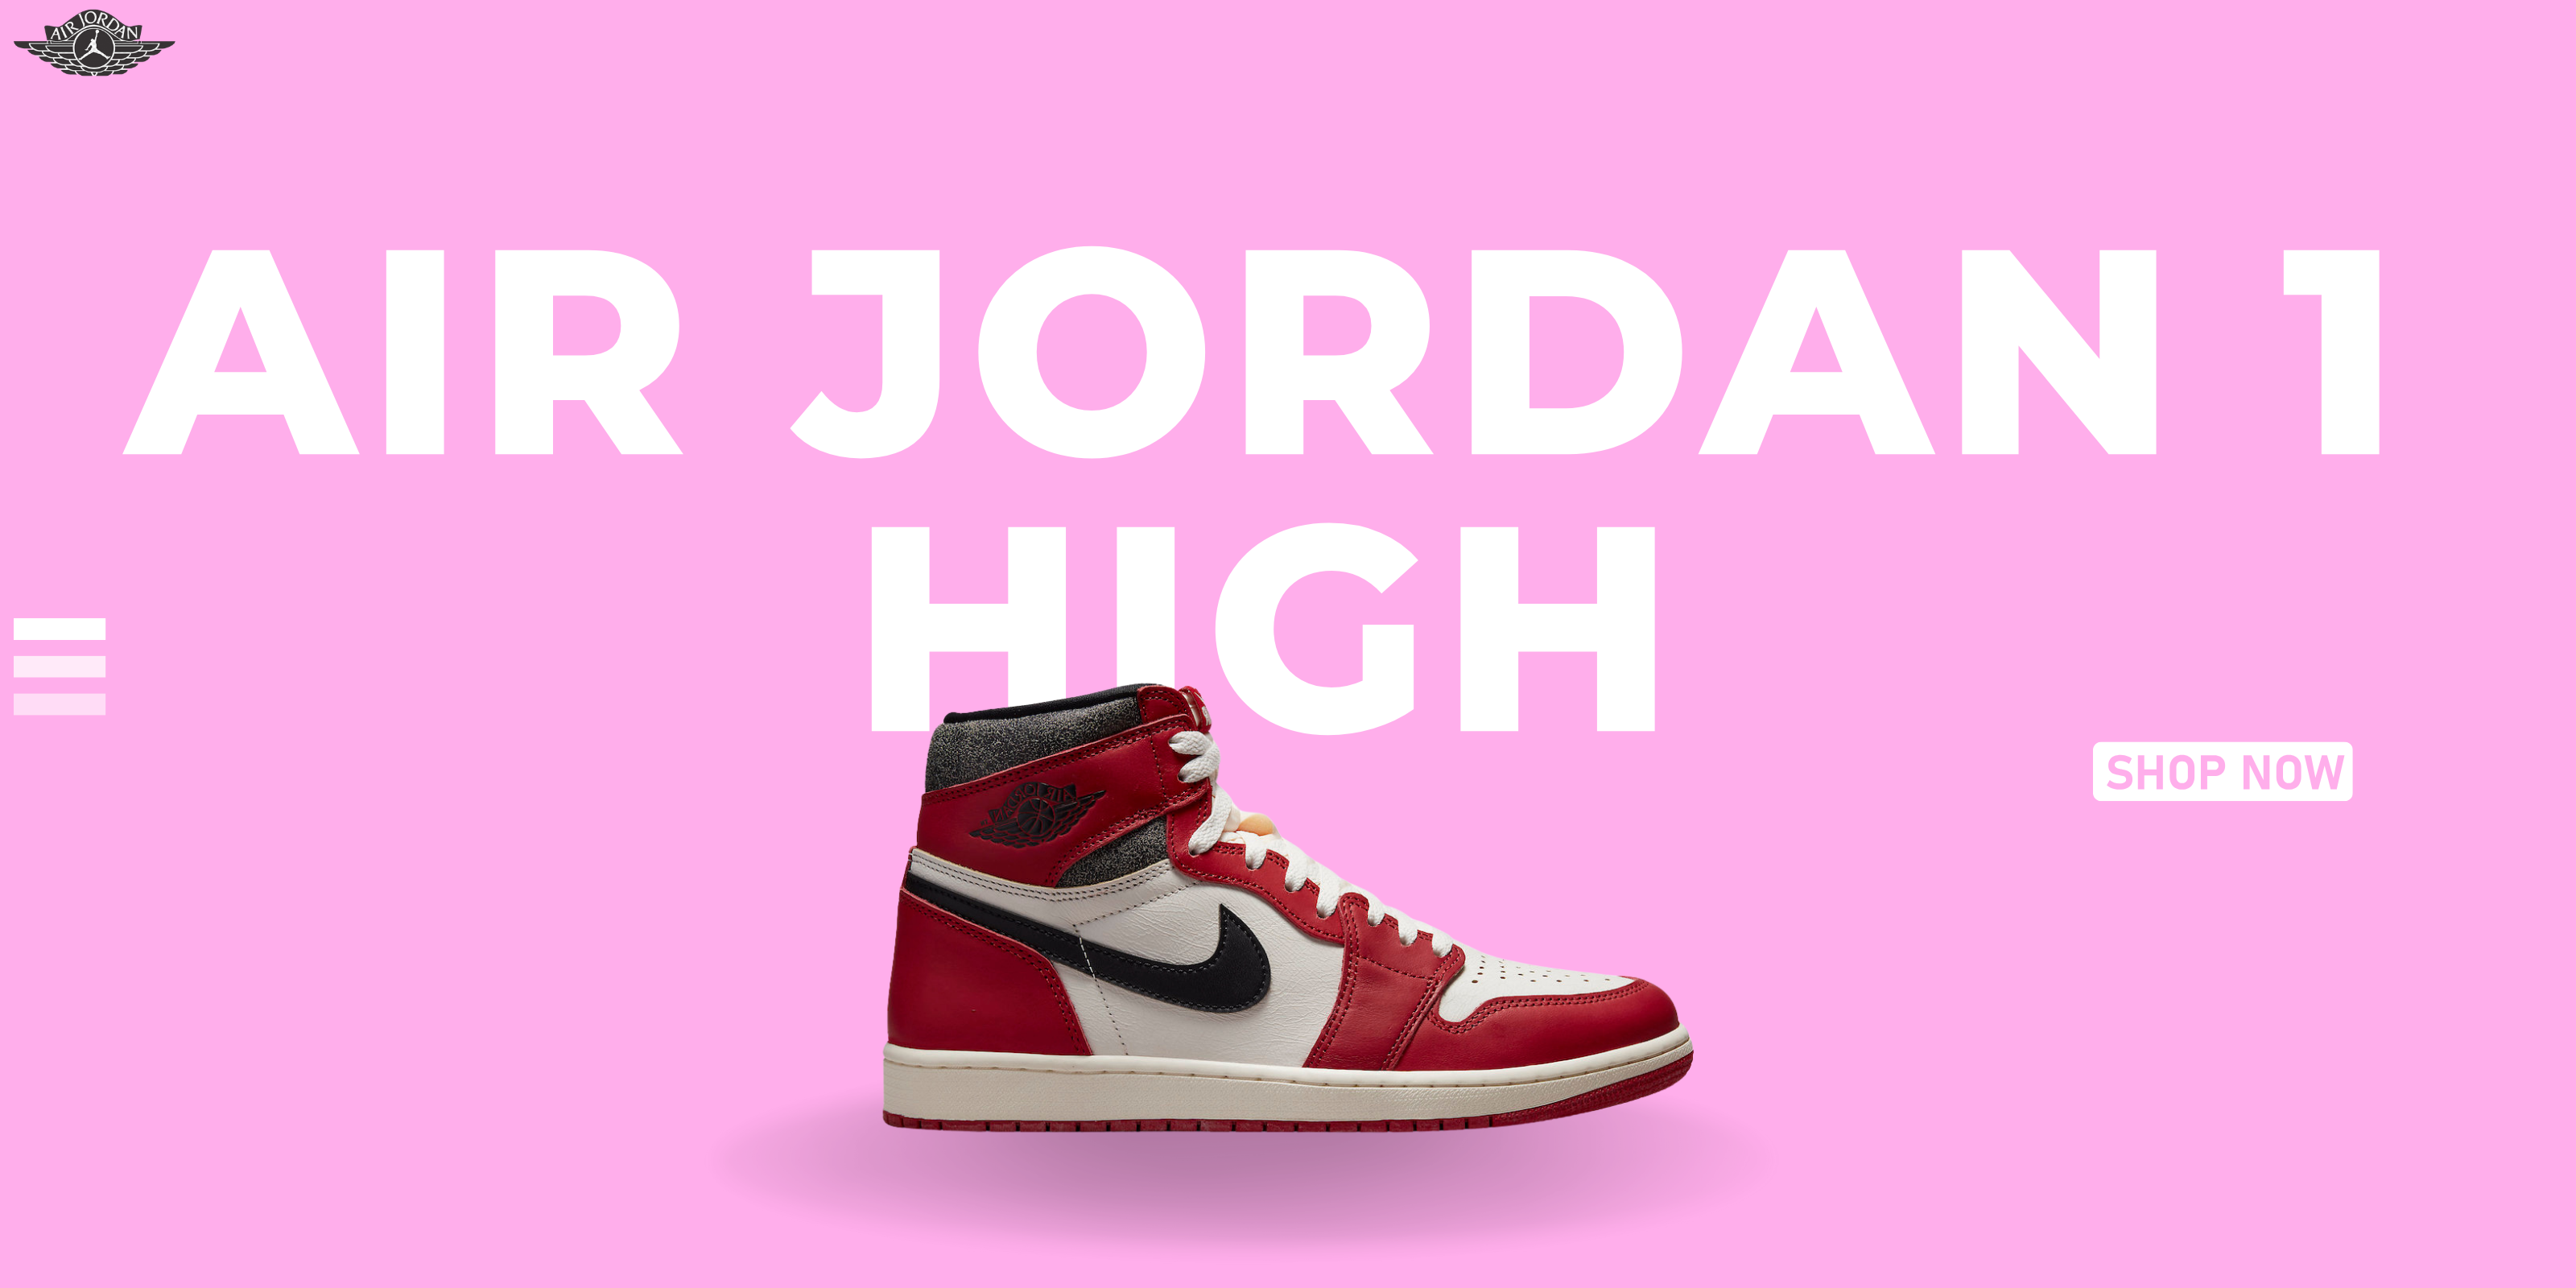 Jordan Highs